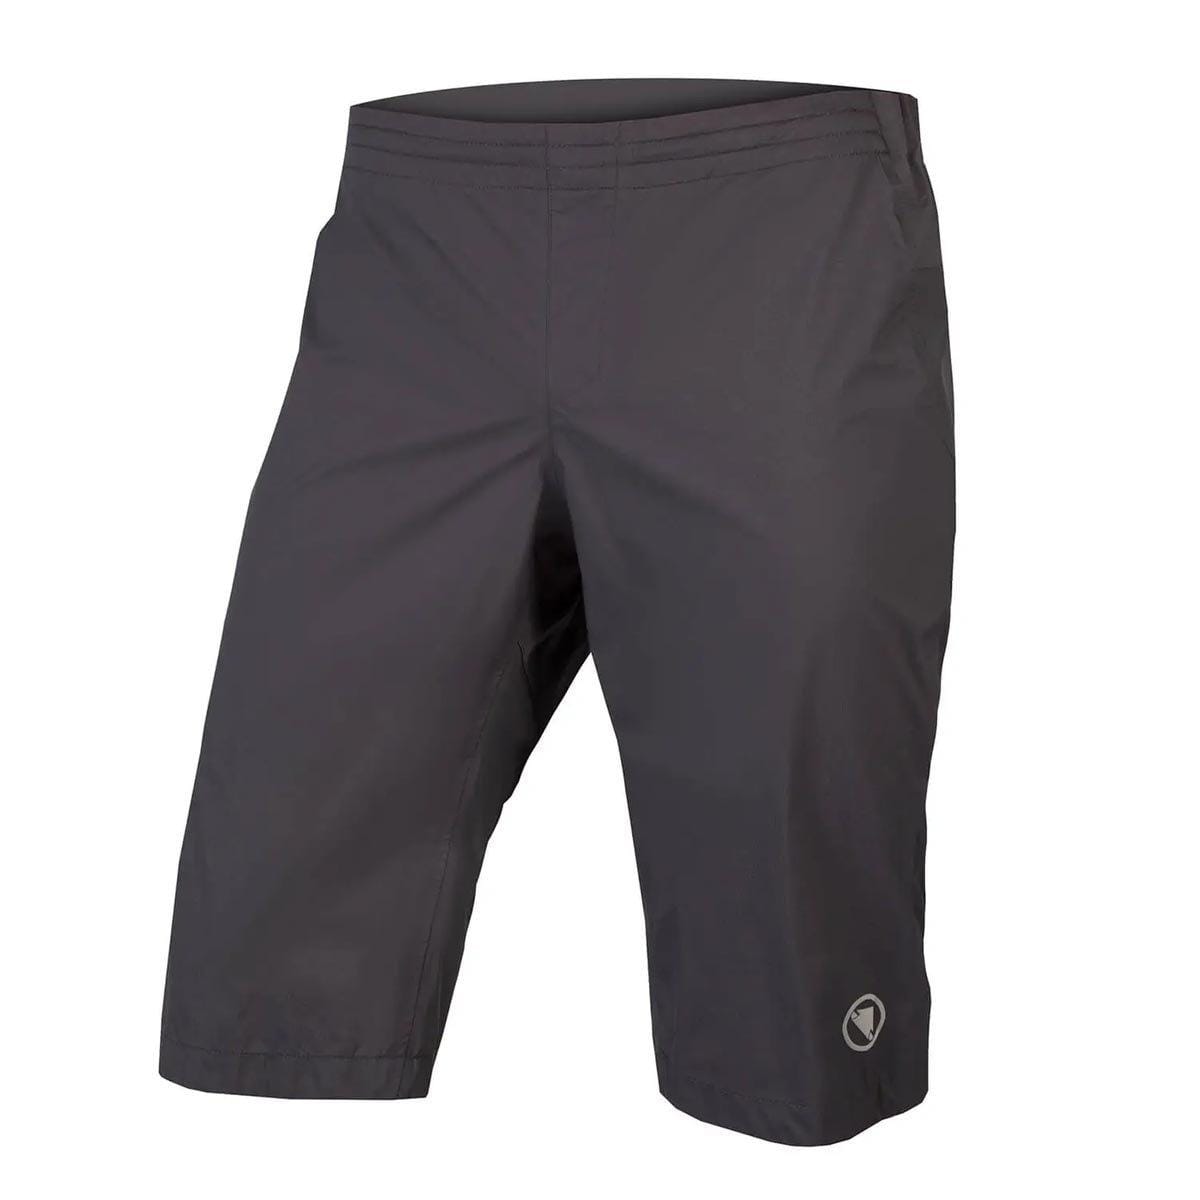 Endura Men's GV500 Waterproof Short Anthracite / Small Apparel - Clothing - Men's Shorts - Mountain